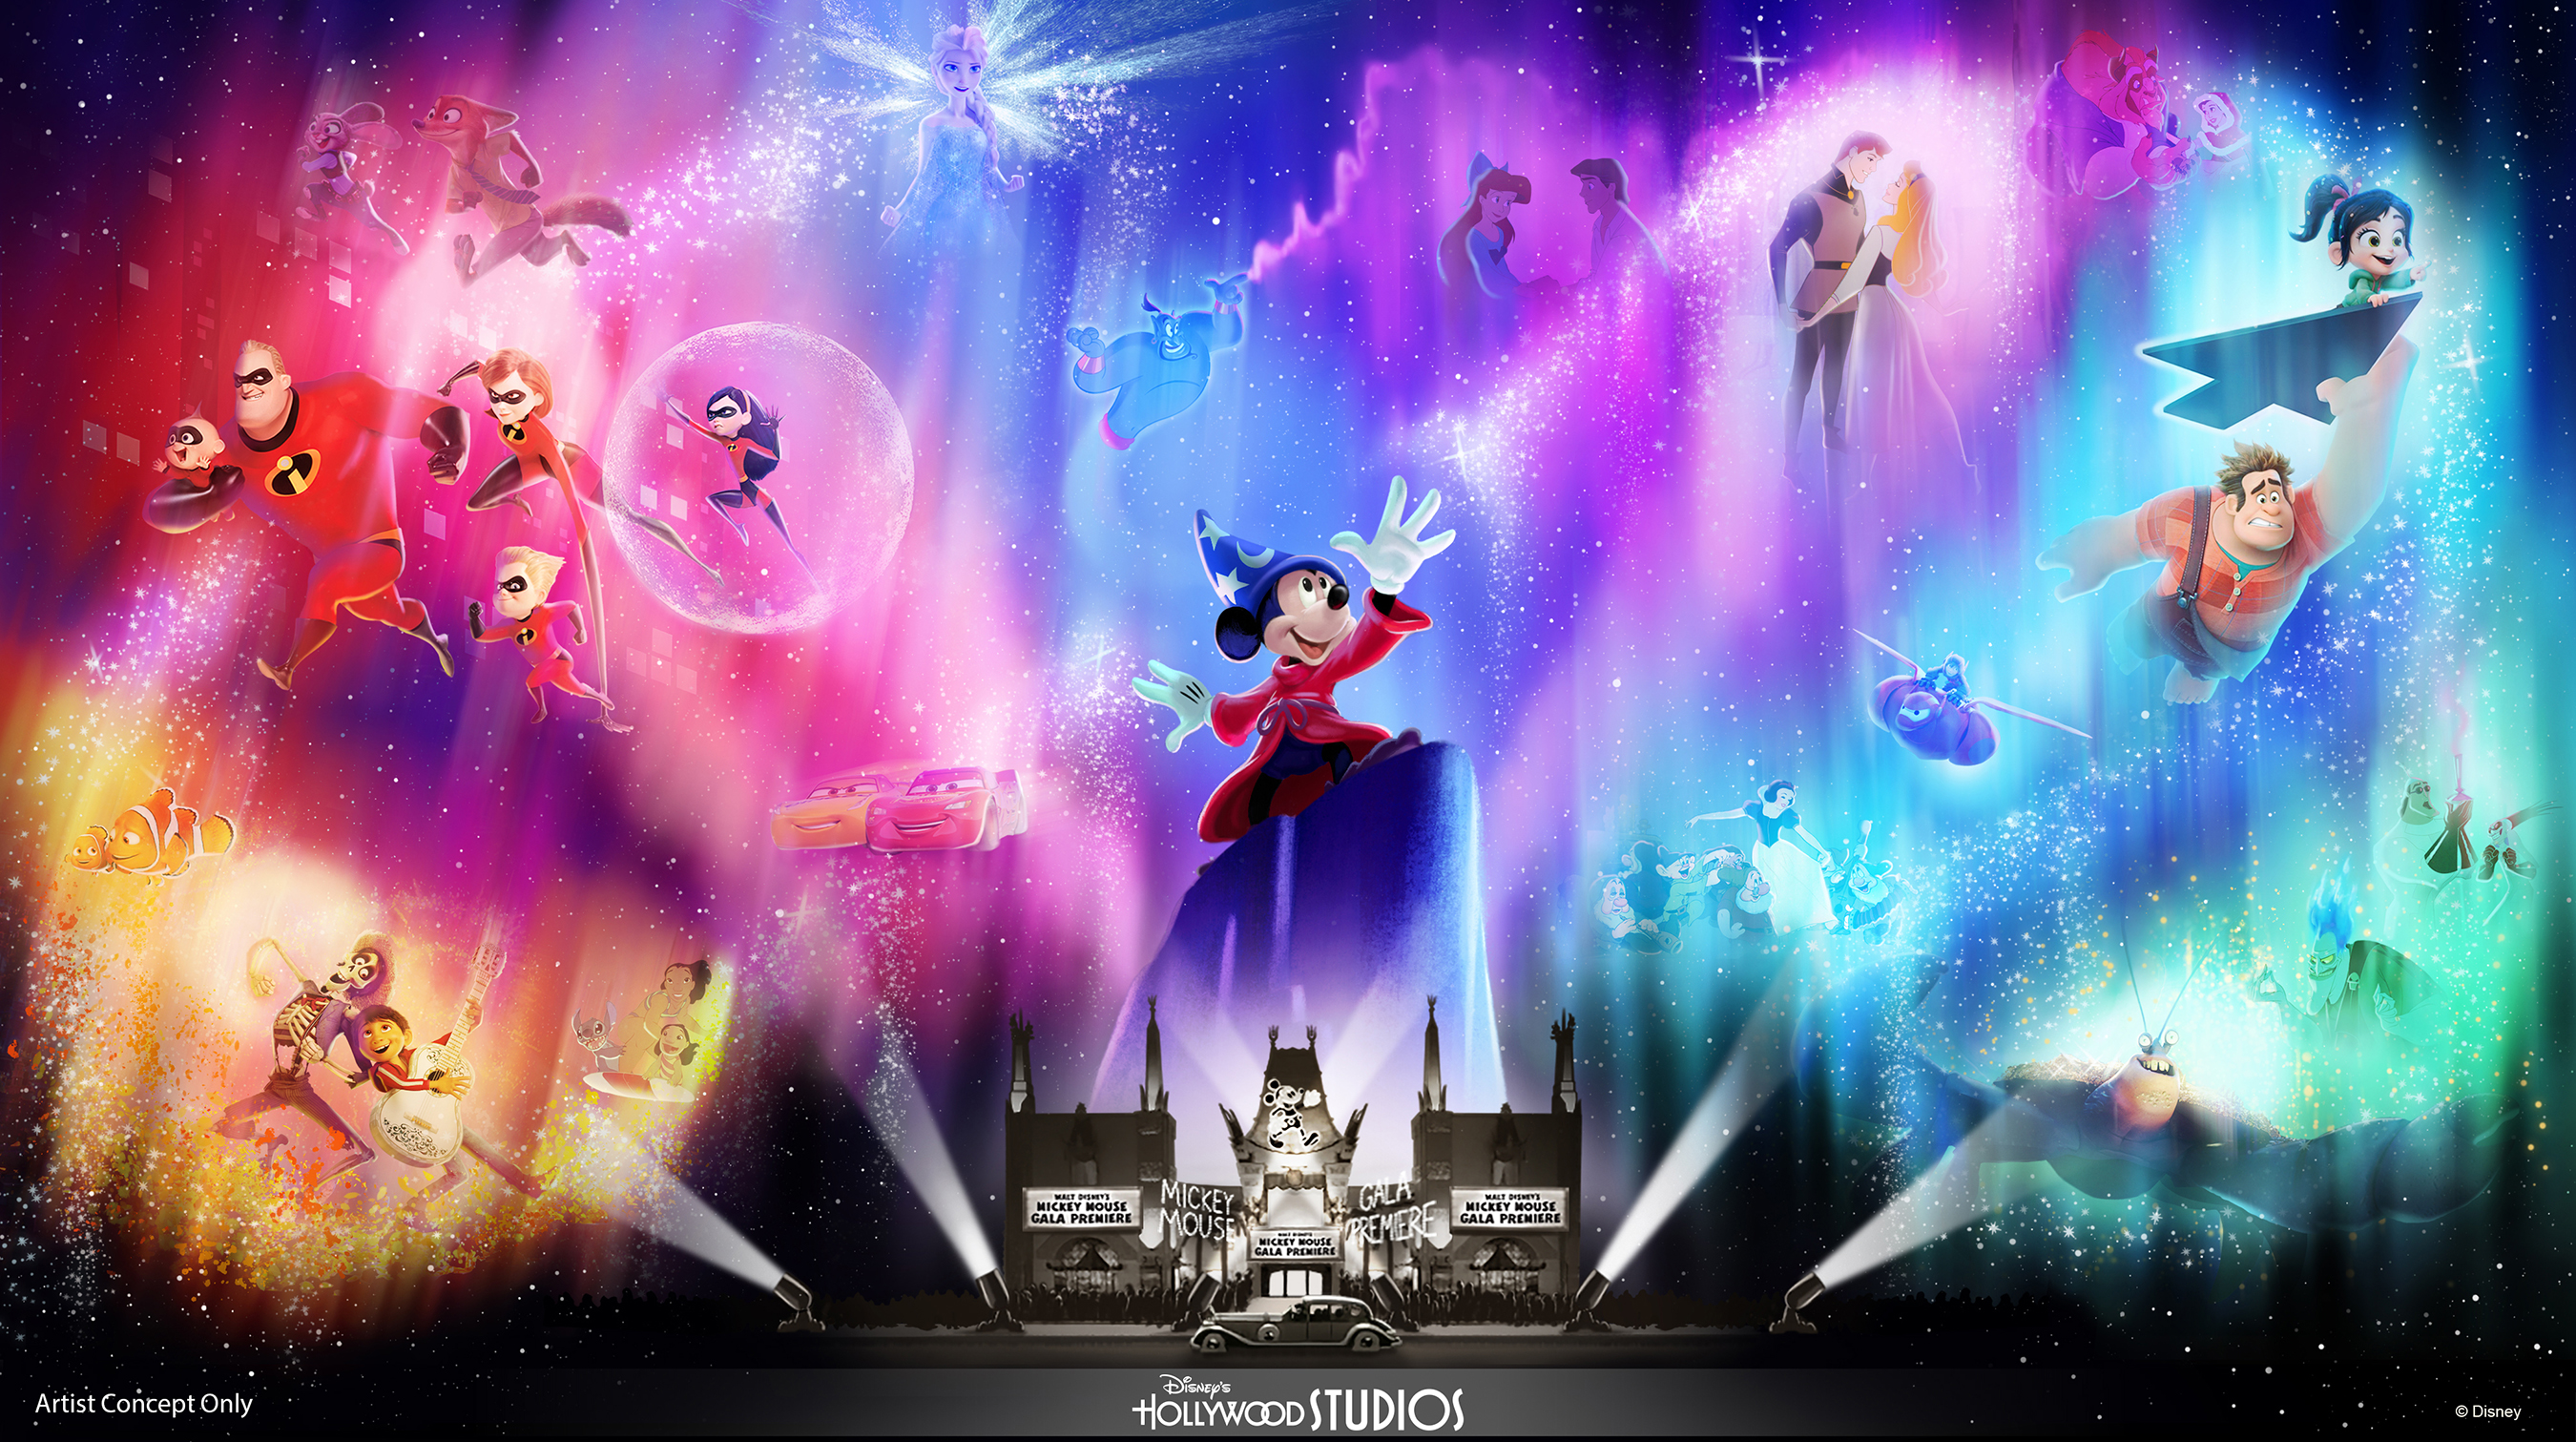 Wonderful World of Animation Coming to Disney's Hollywood Studio